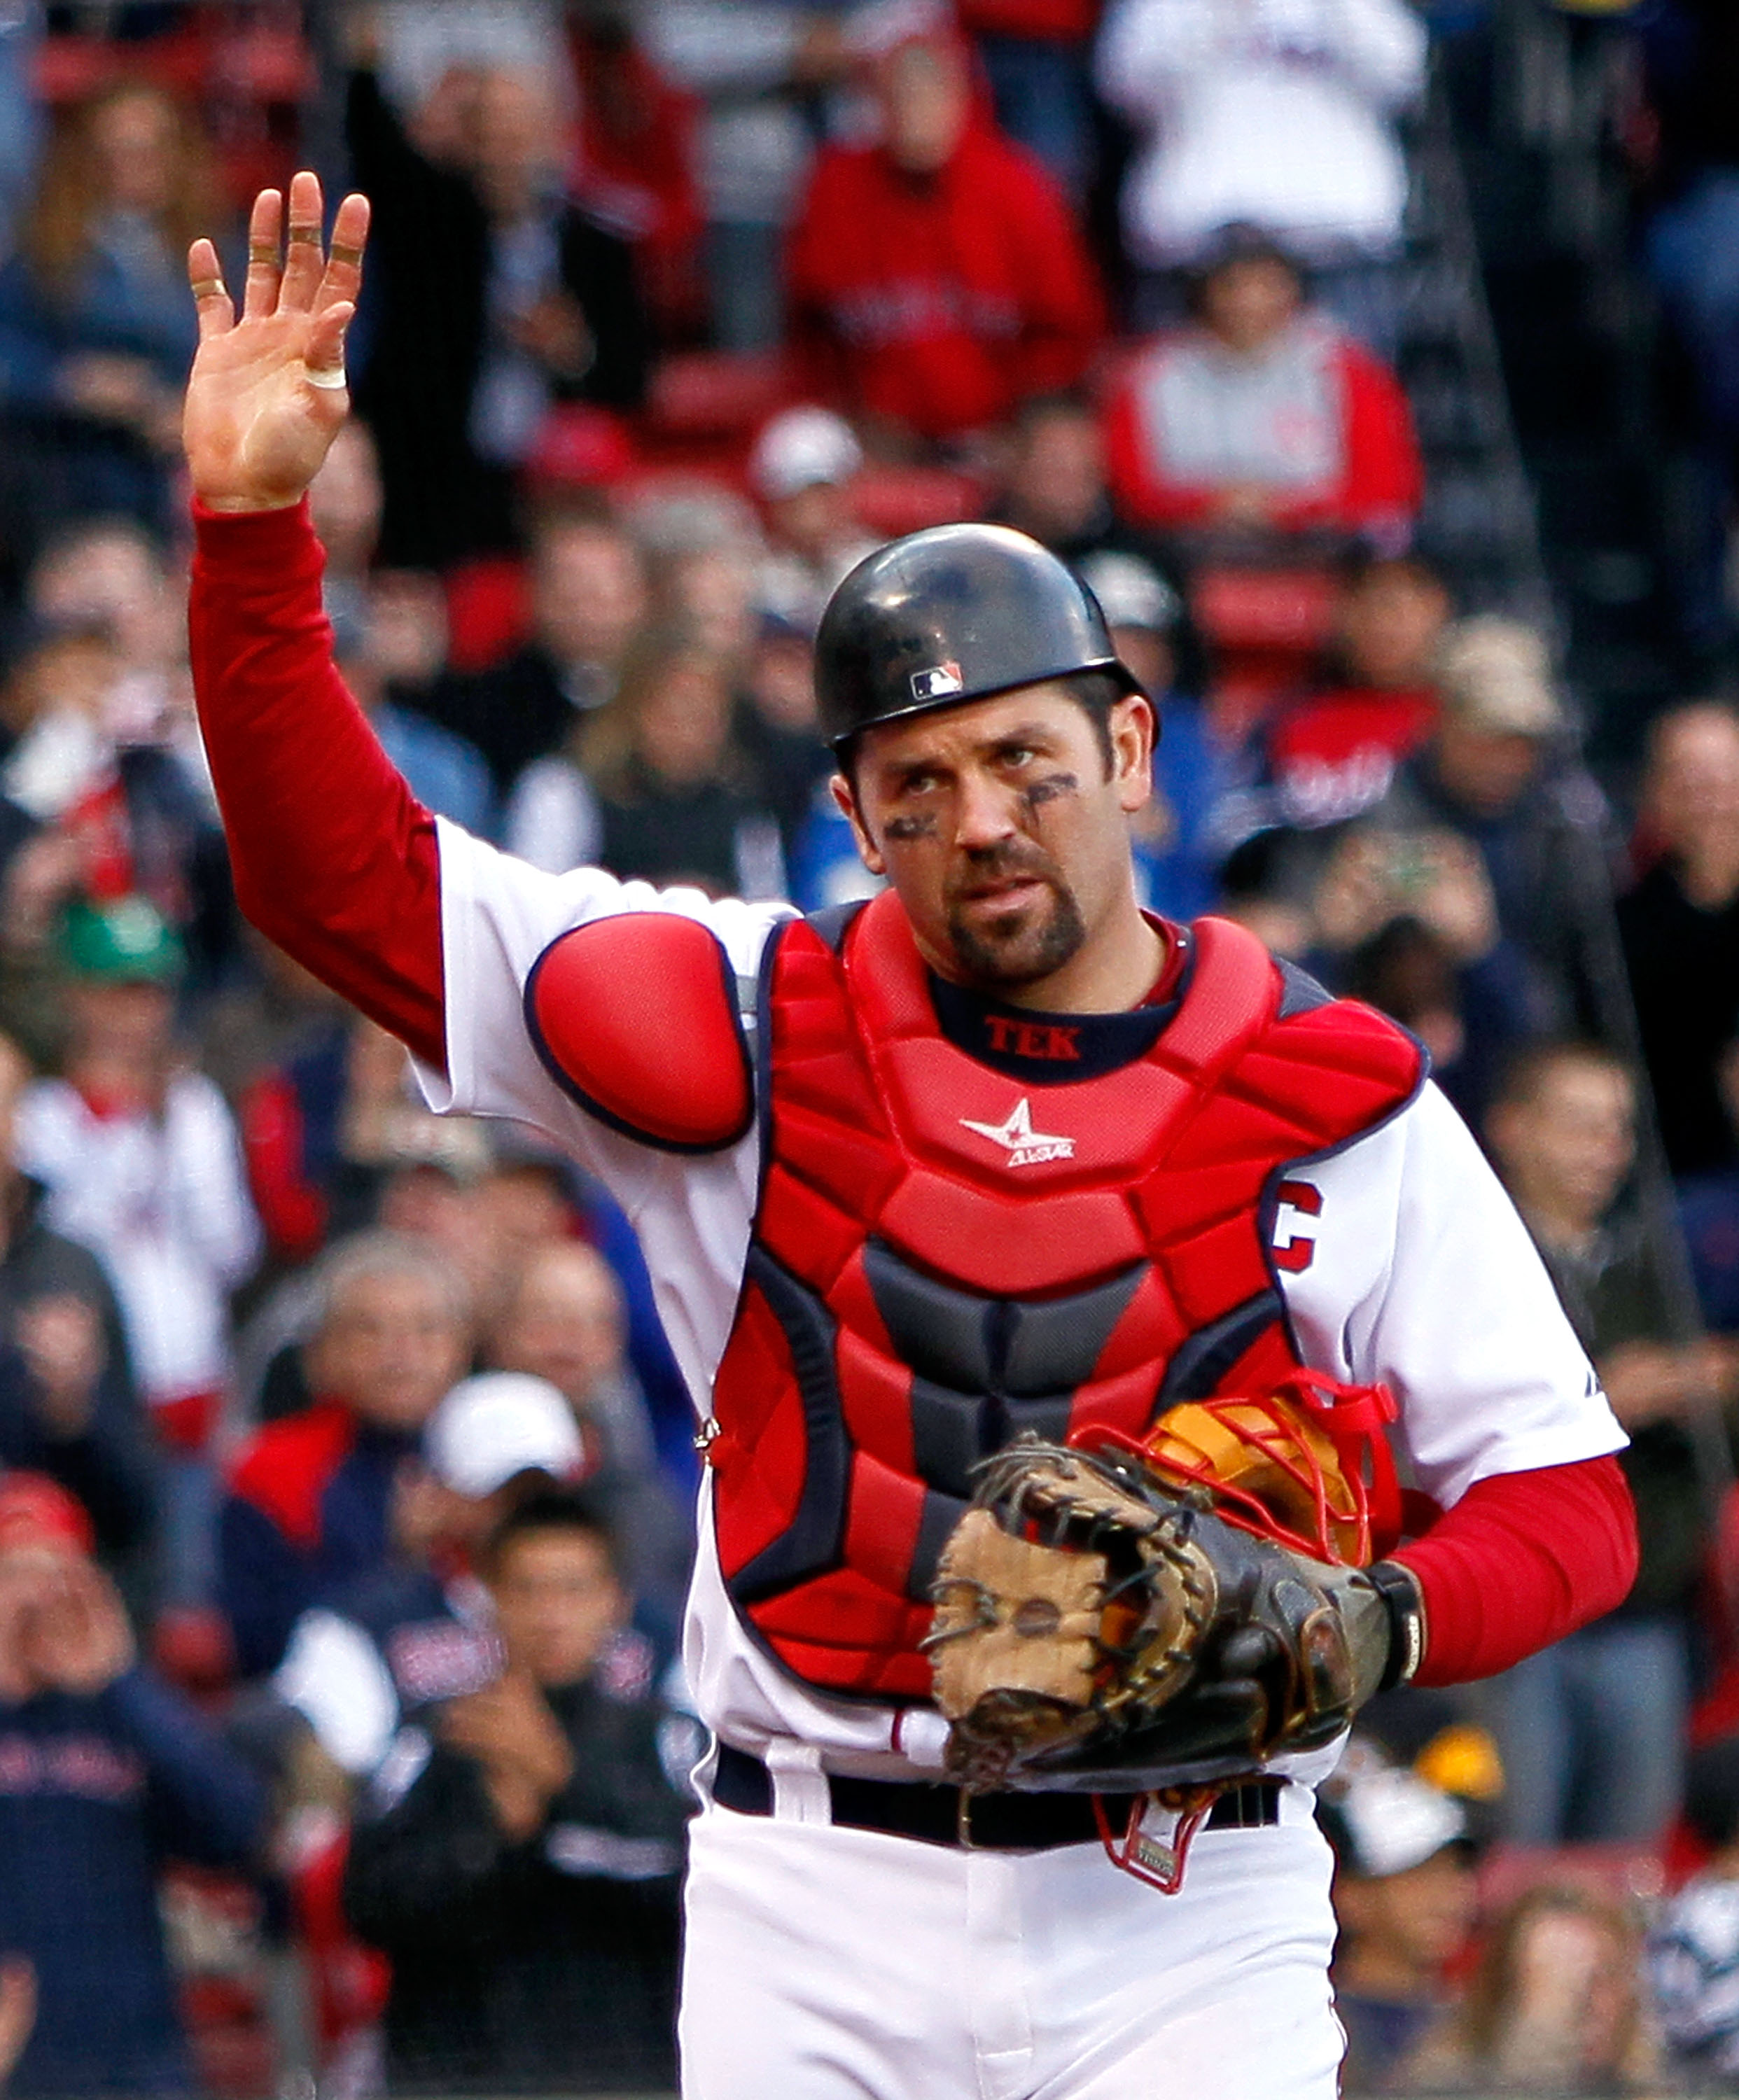 Red Sox catcher Varitek officially retires